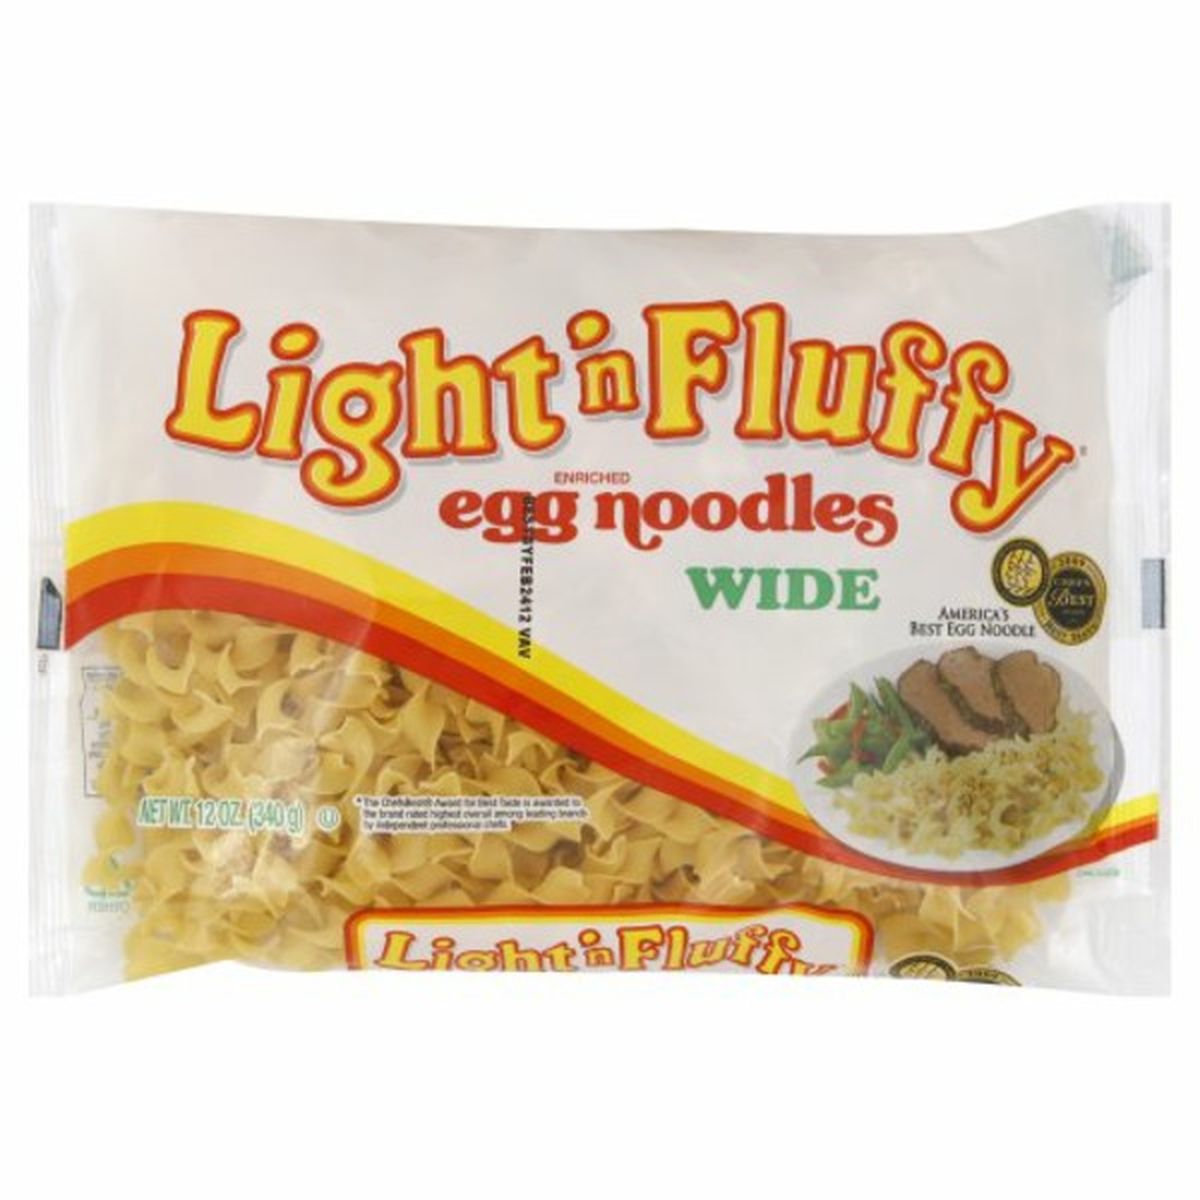 Calories in Light 'n Fluffy Egg Noodles, Enriched, Wide